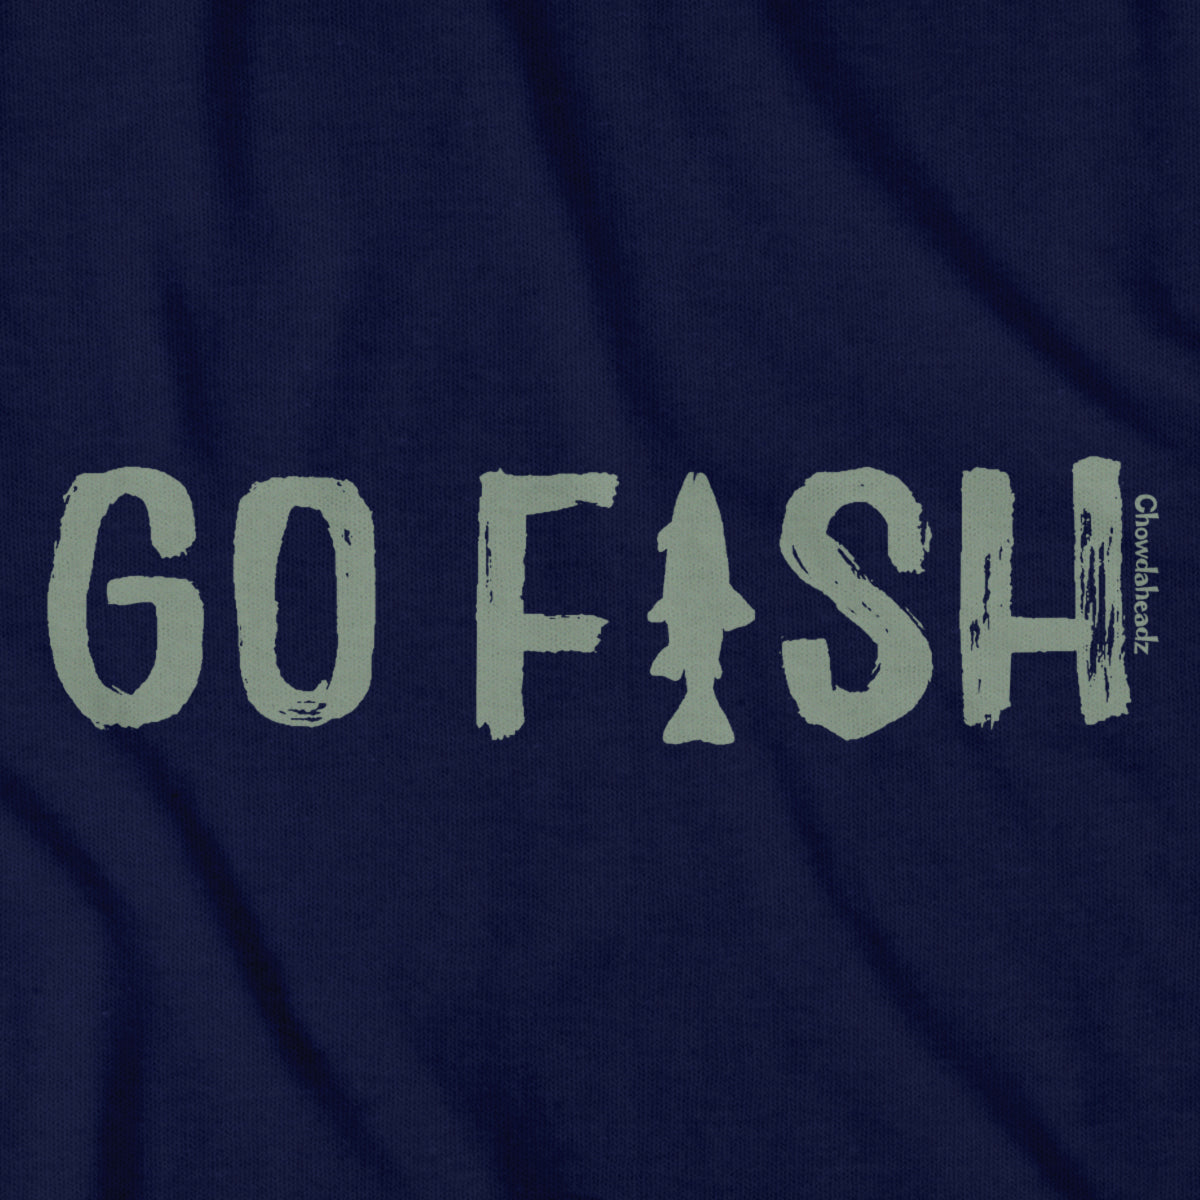 Go Fish T-Shirt - Chowdaheadz